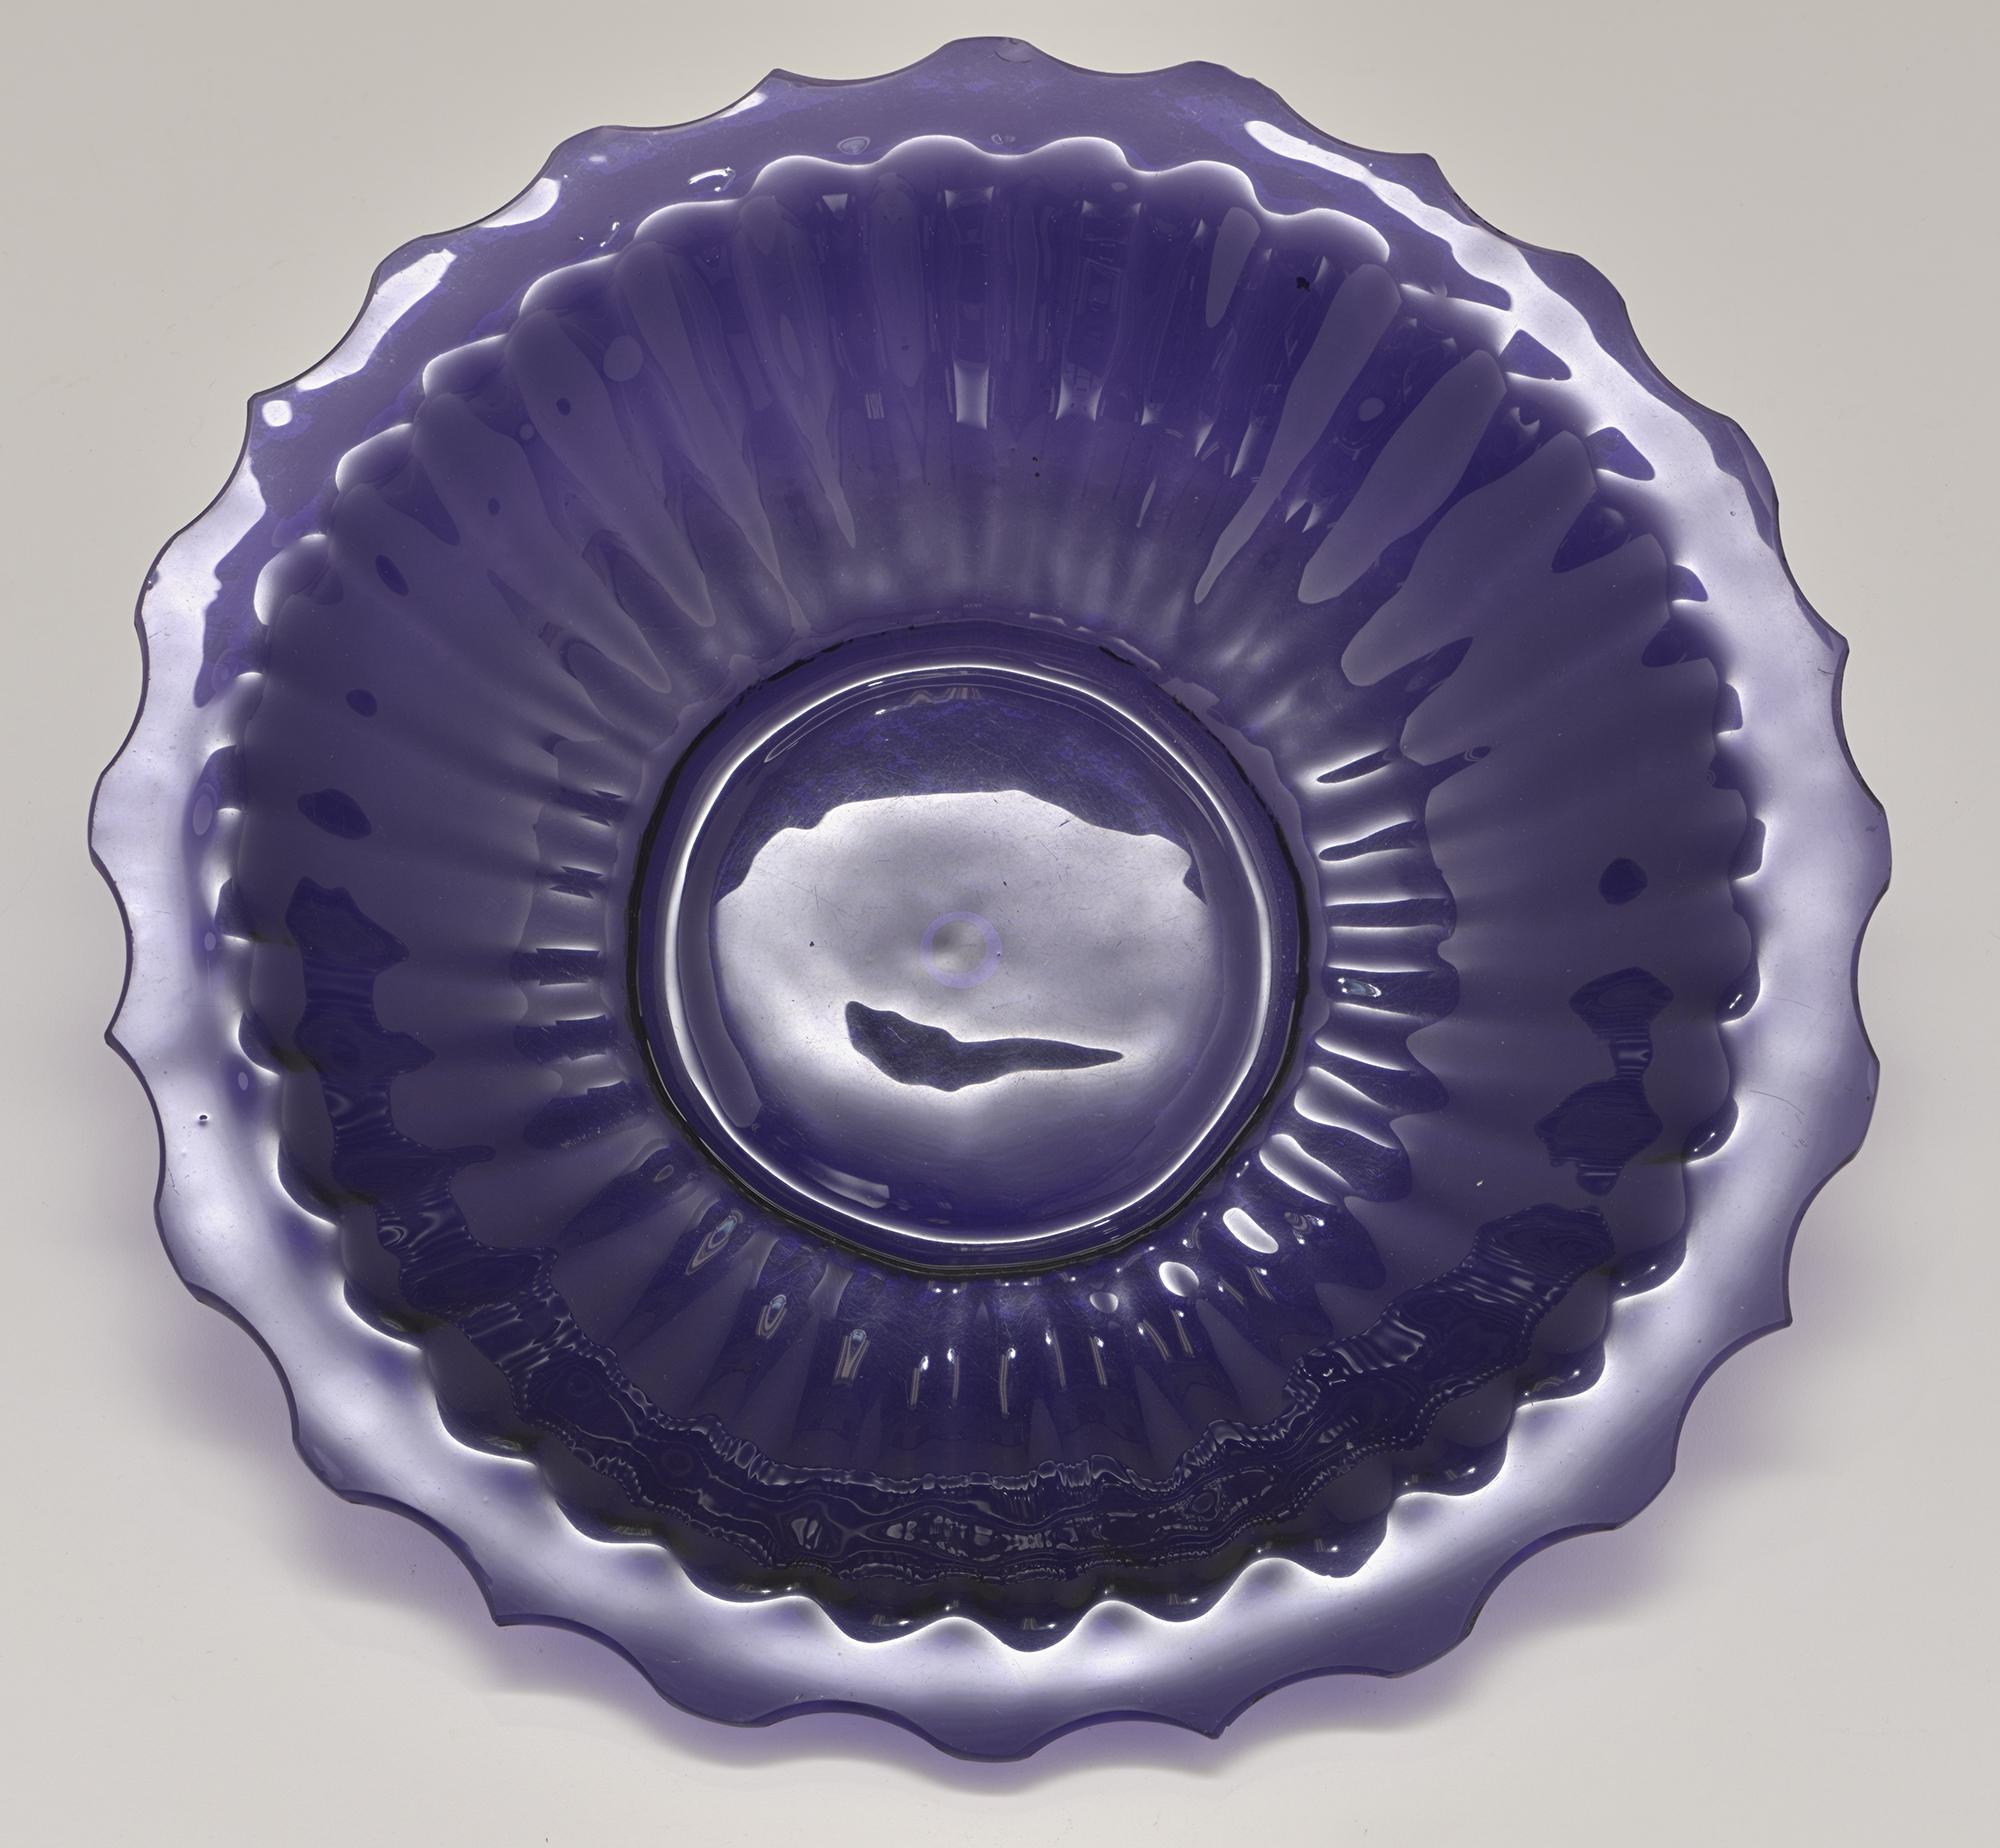 A purple dish